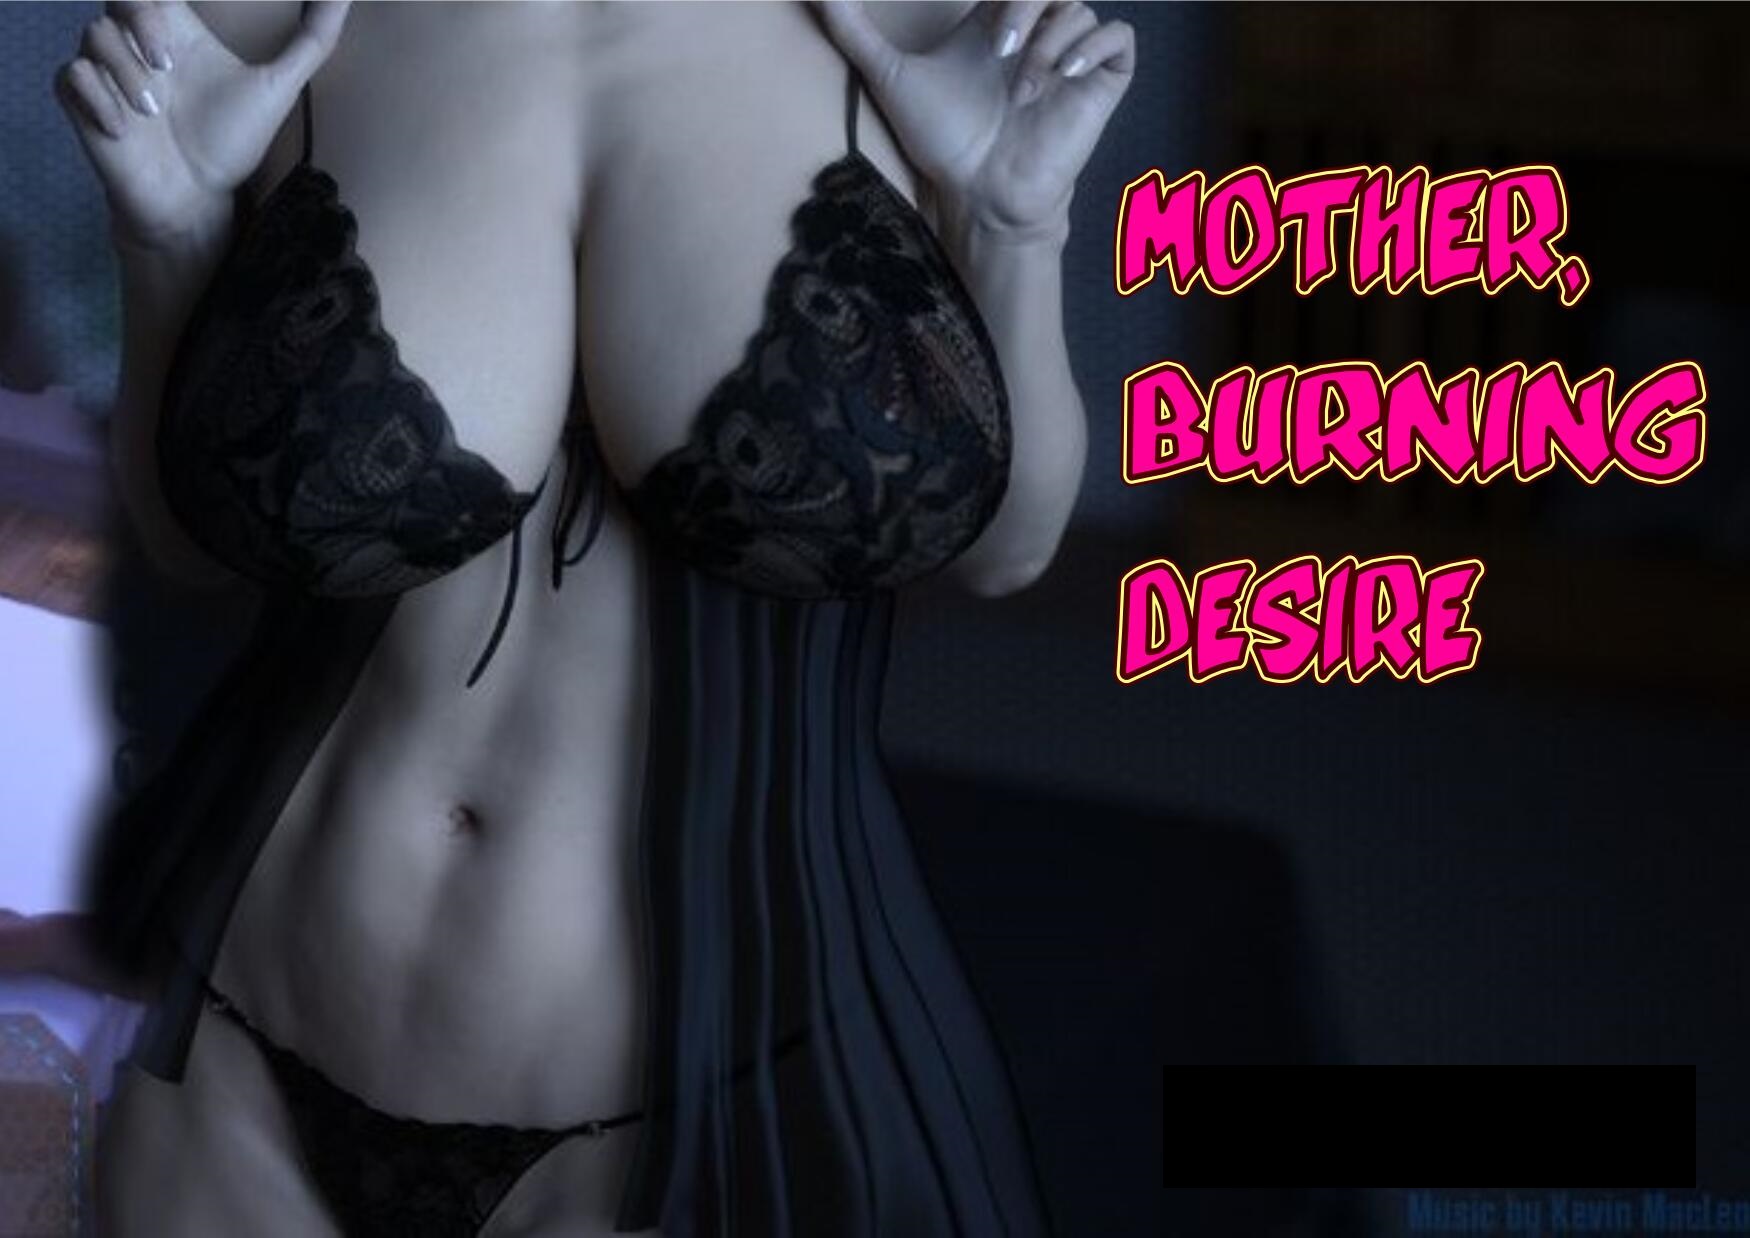 Mother burning desire